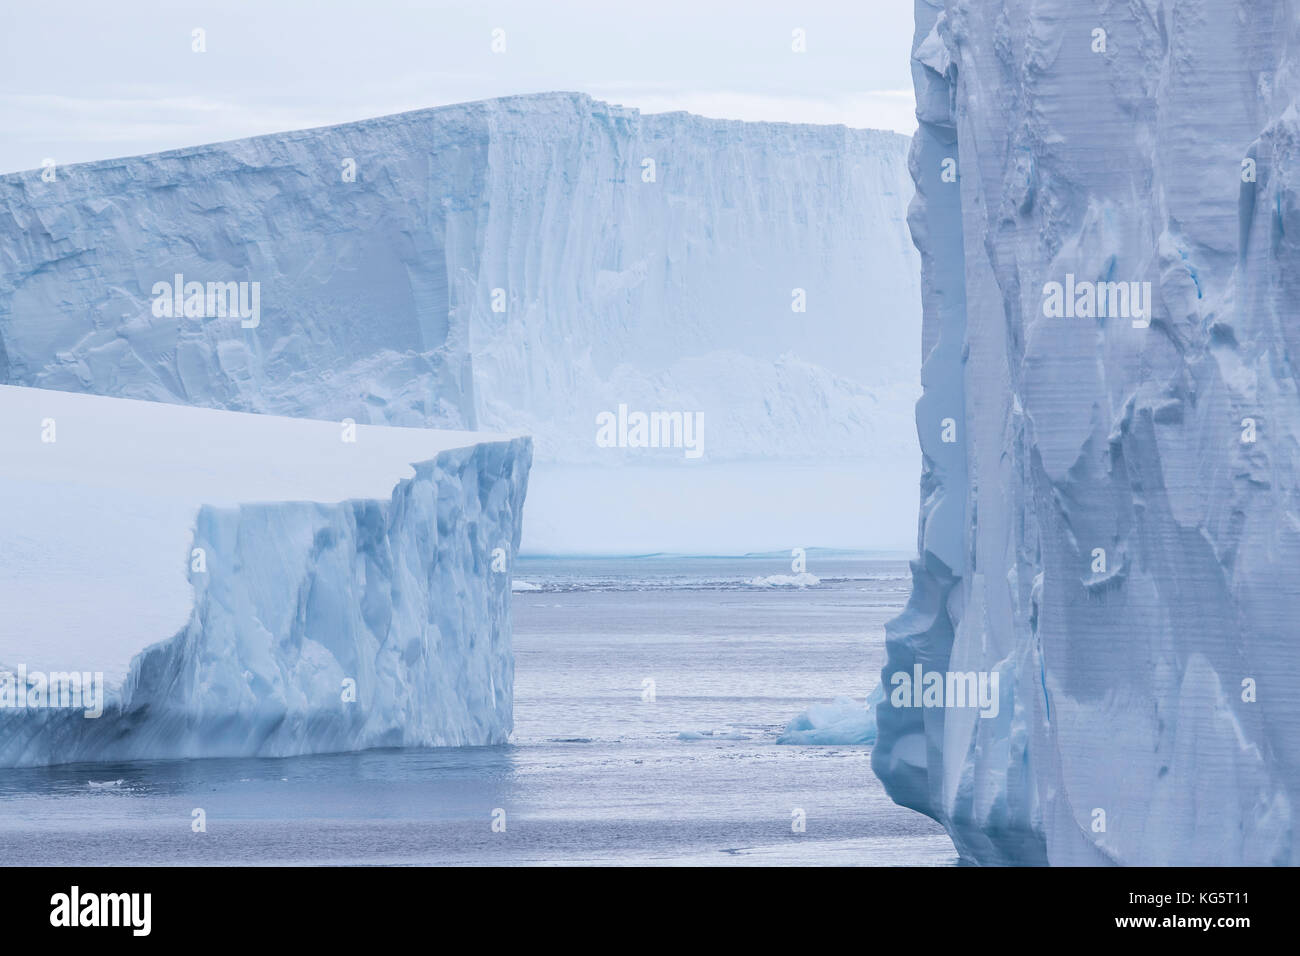 Iceberg tabulari, Antartide Foto Stock